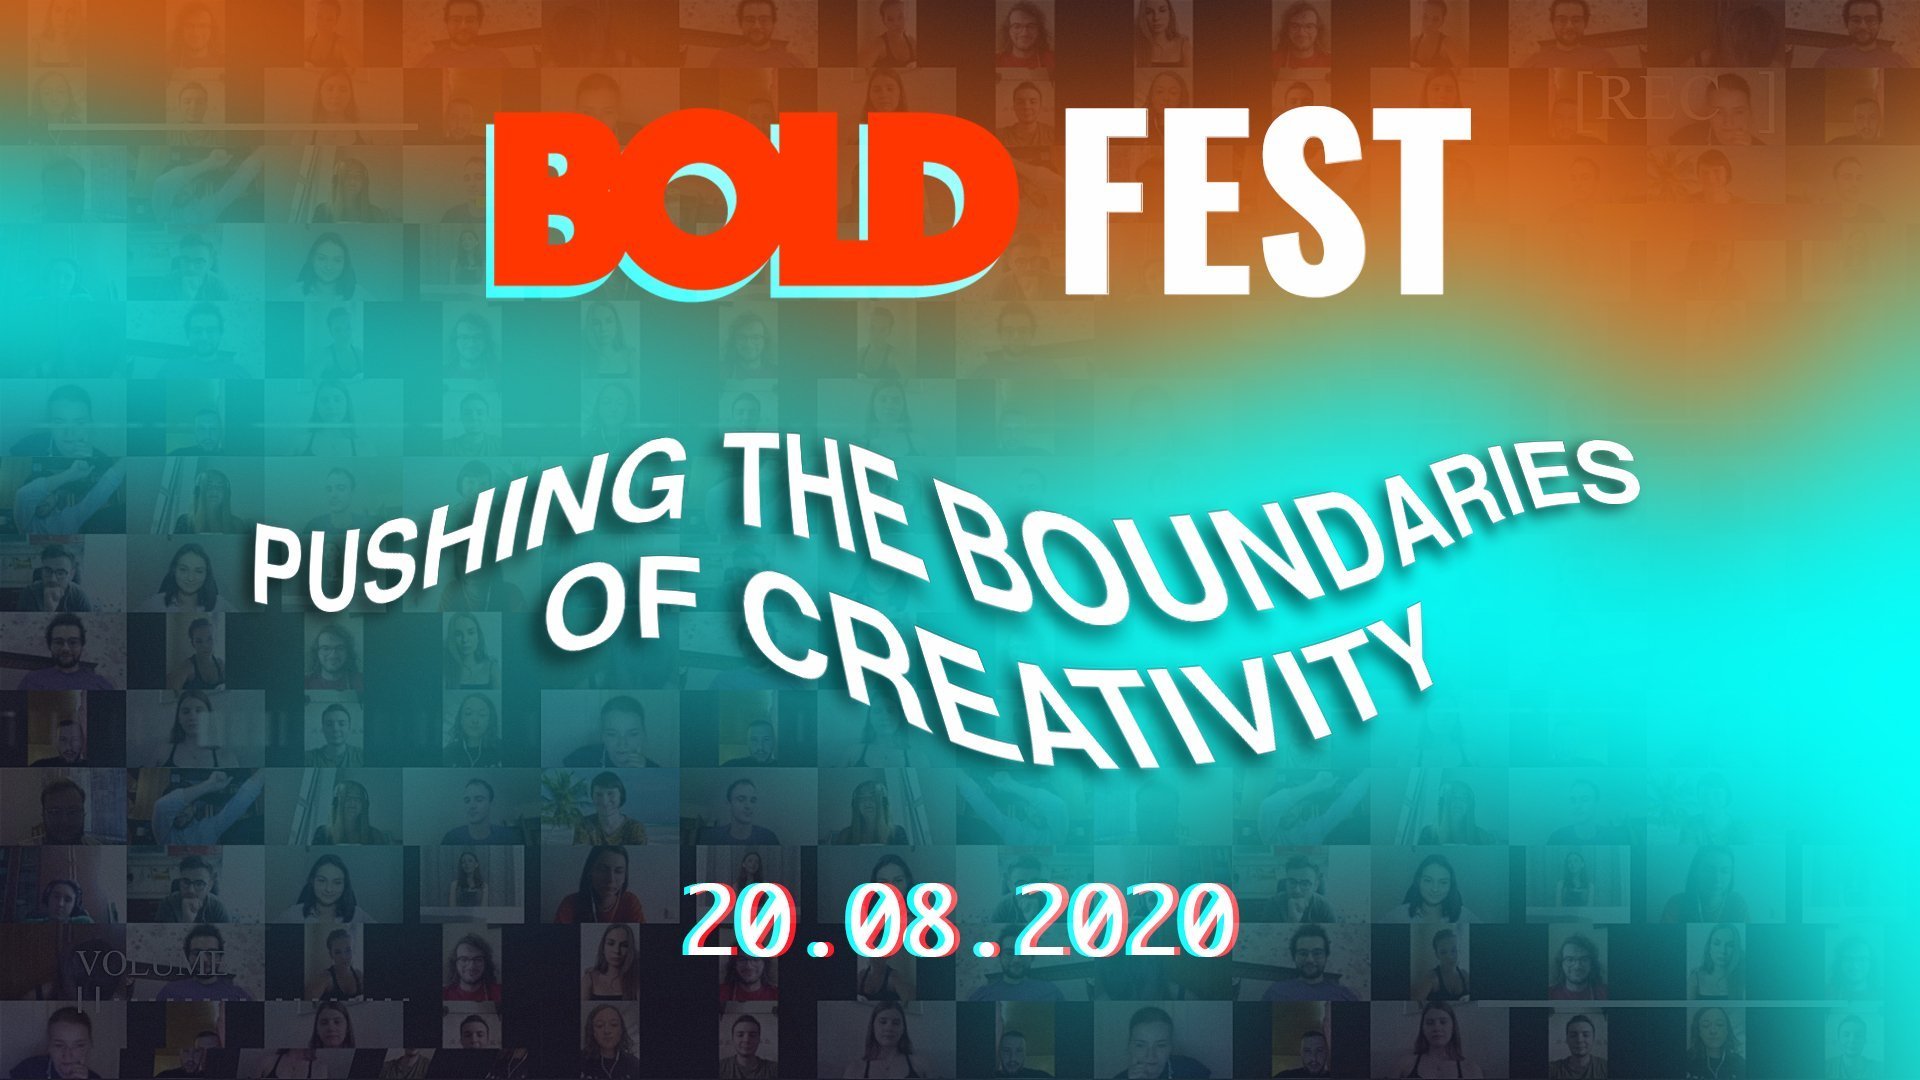 BOLD FEST Pushing the boundaries of creativity